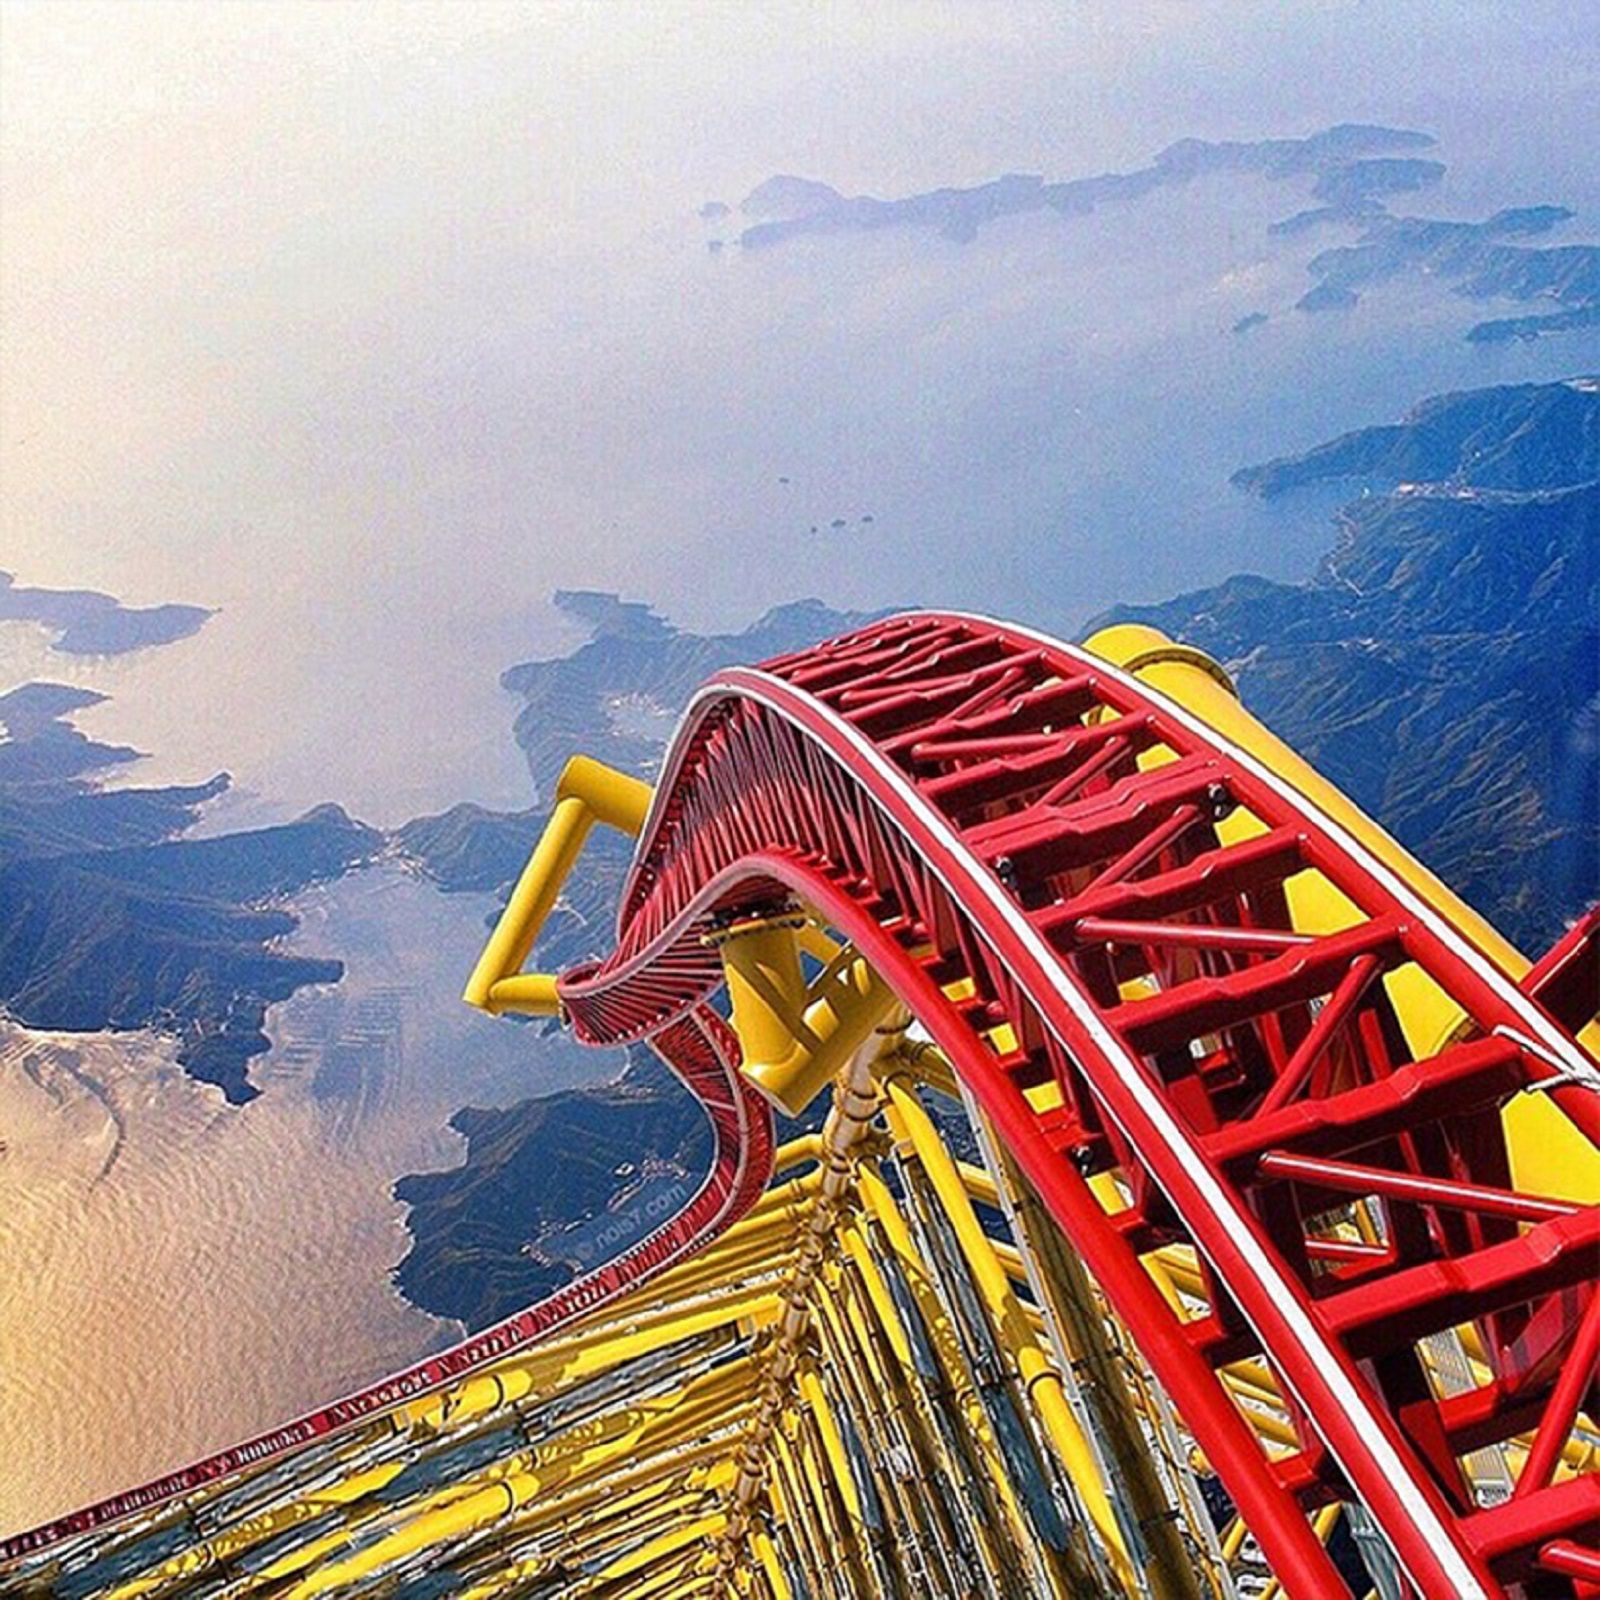 The world's craziest rollercoaster